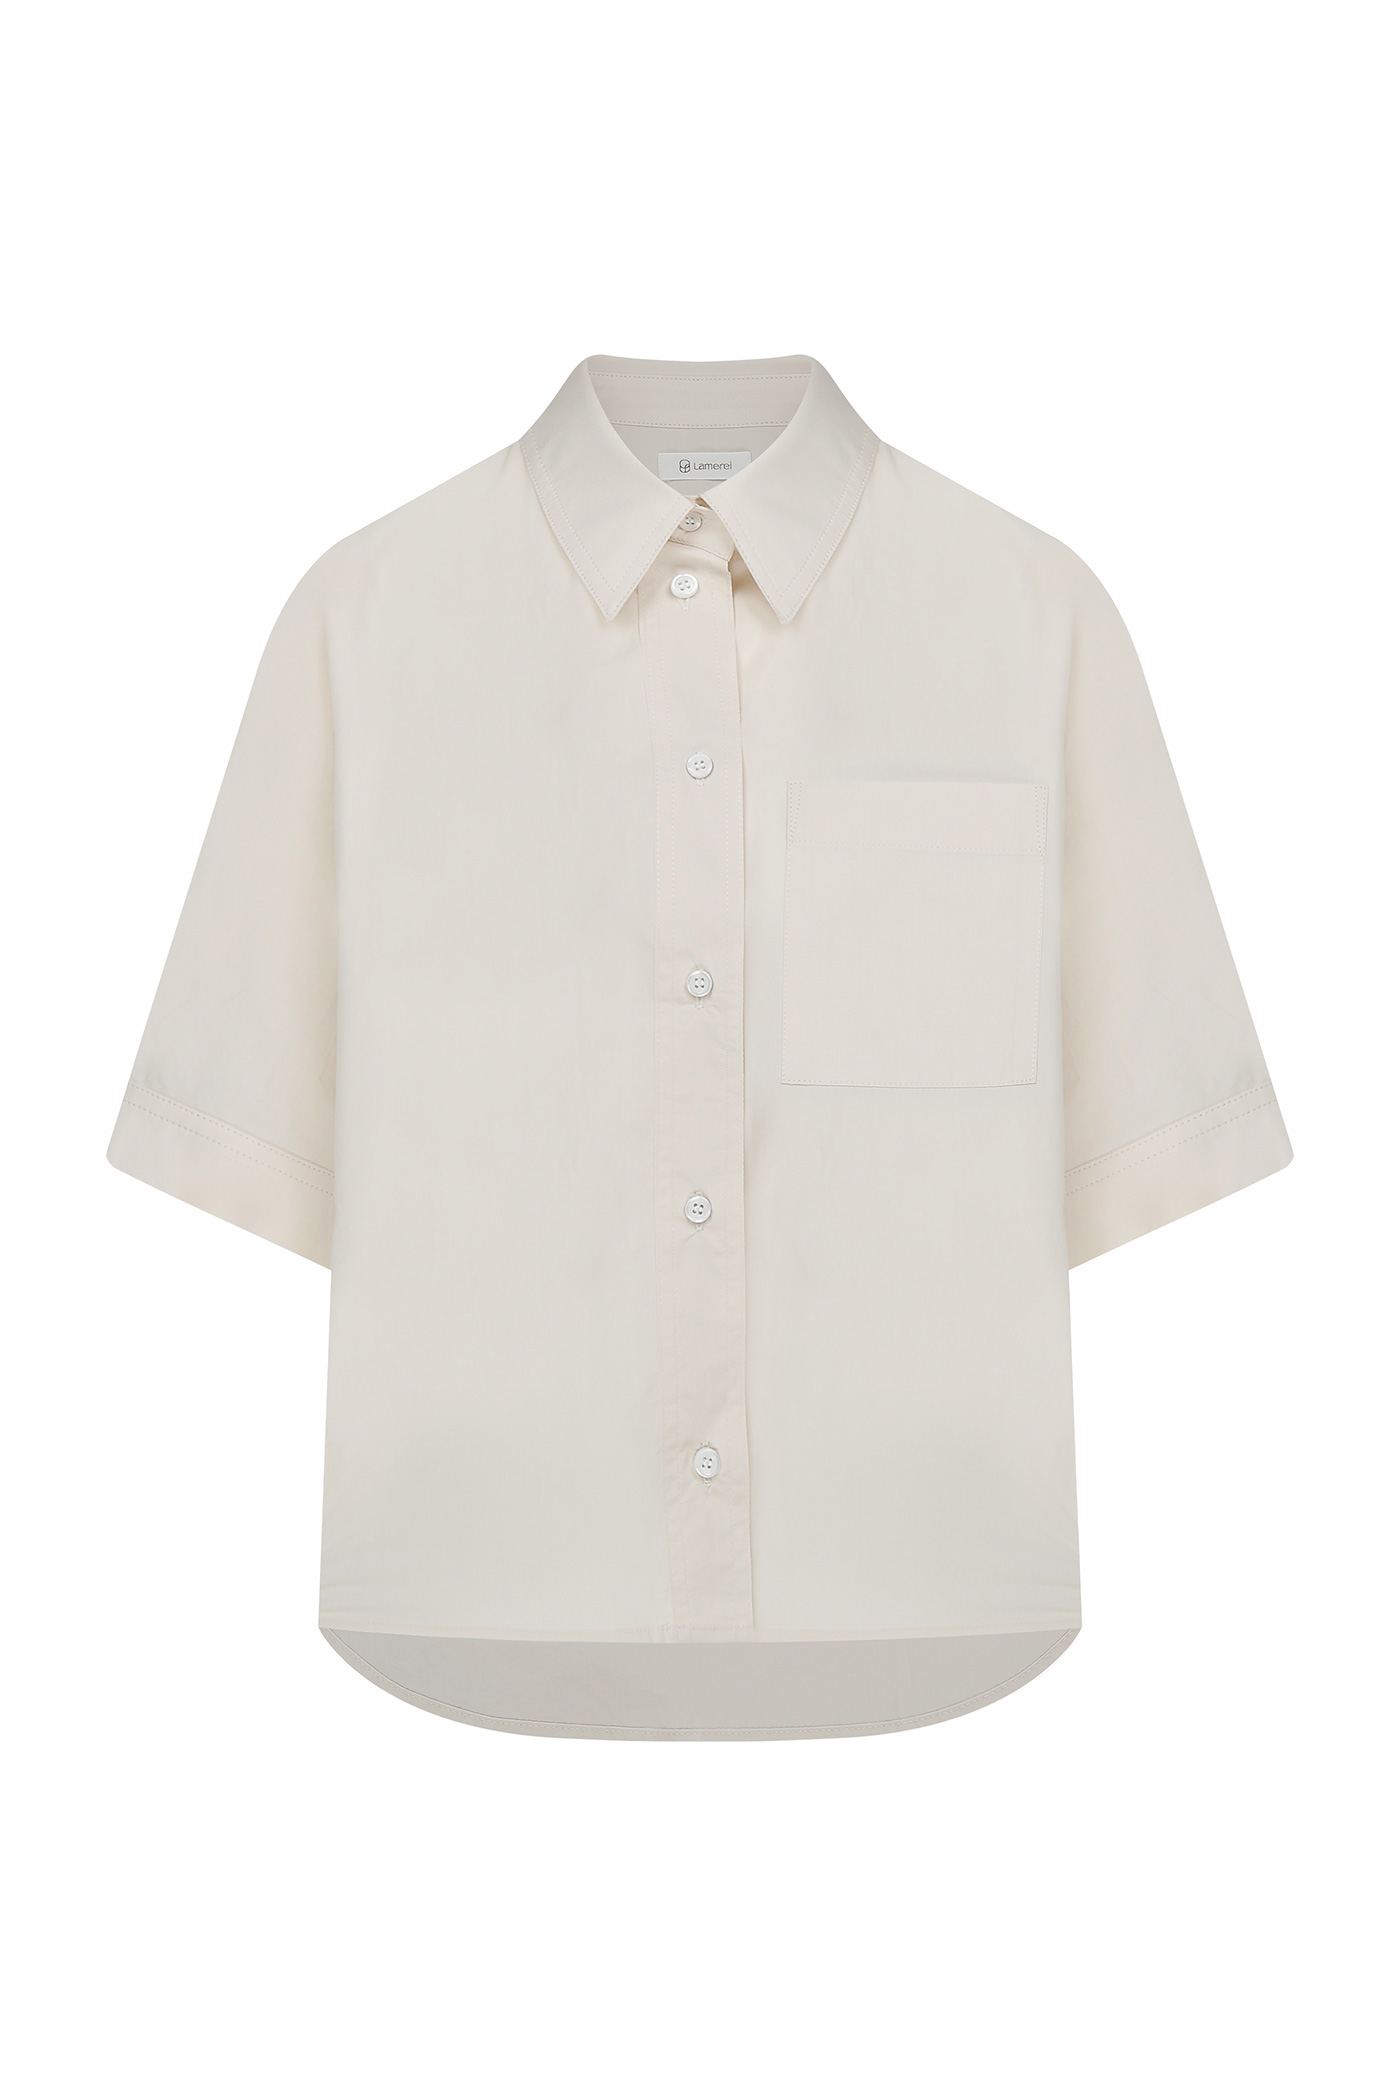 Cotton Placket Shirt-Beige